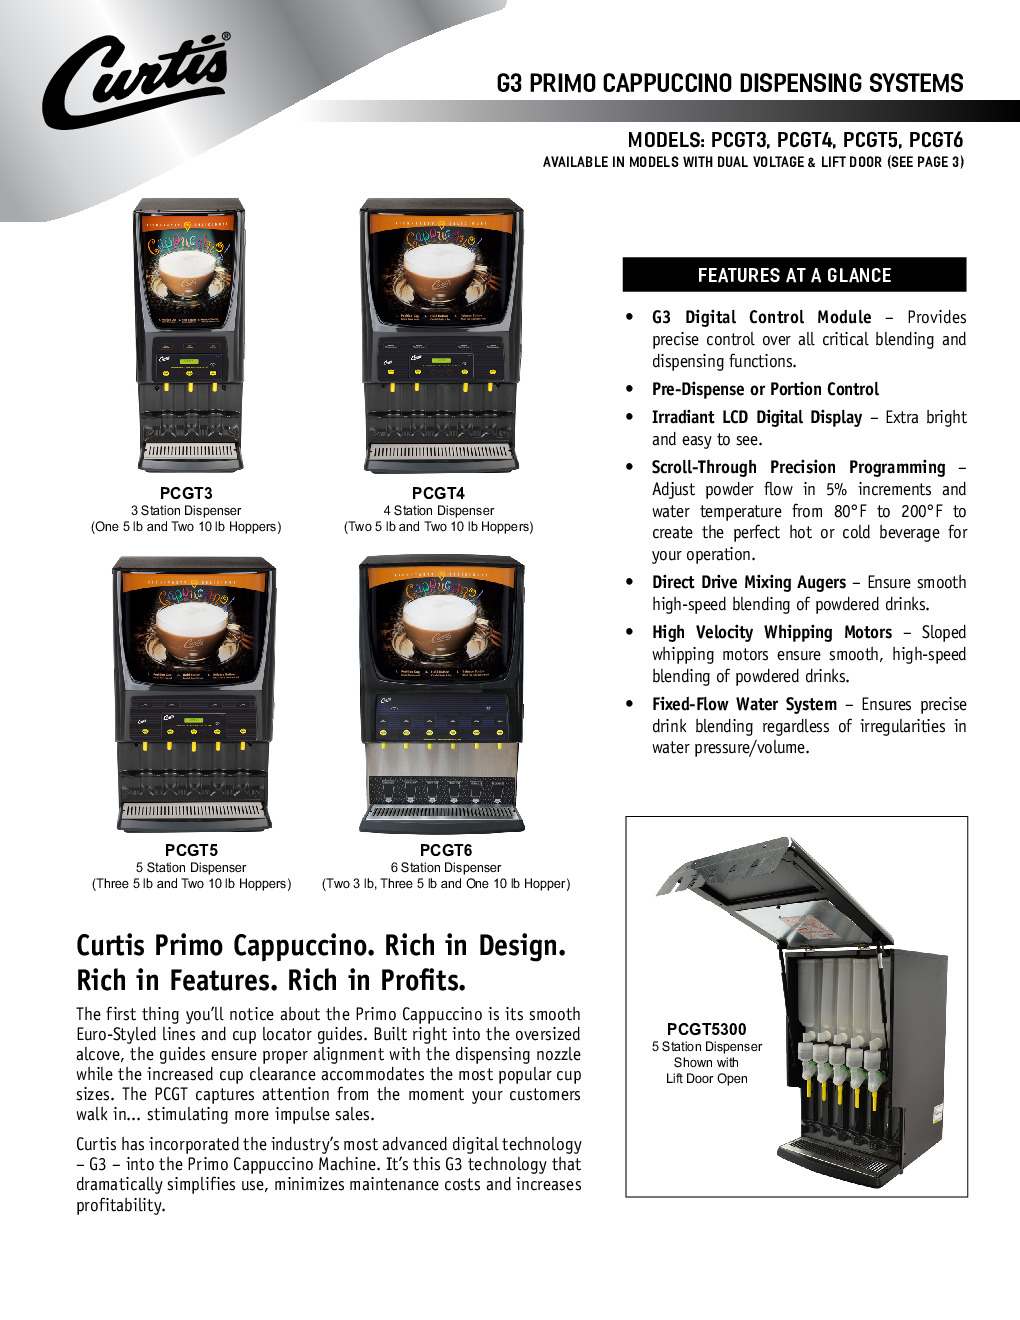 Curtis PCGT5800 Electric (Hot) Beverage Dispenser